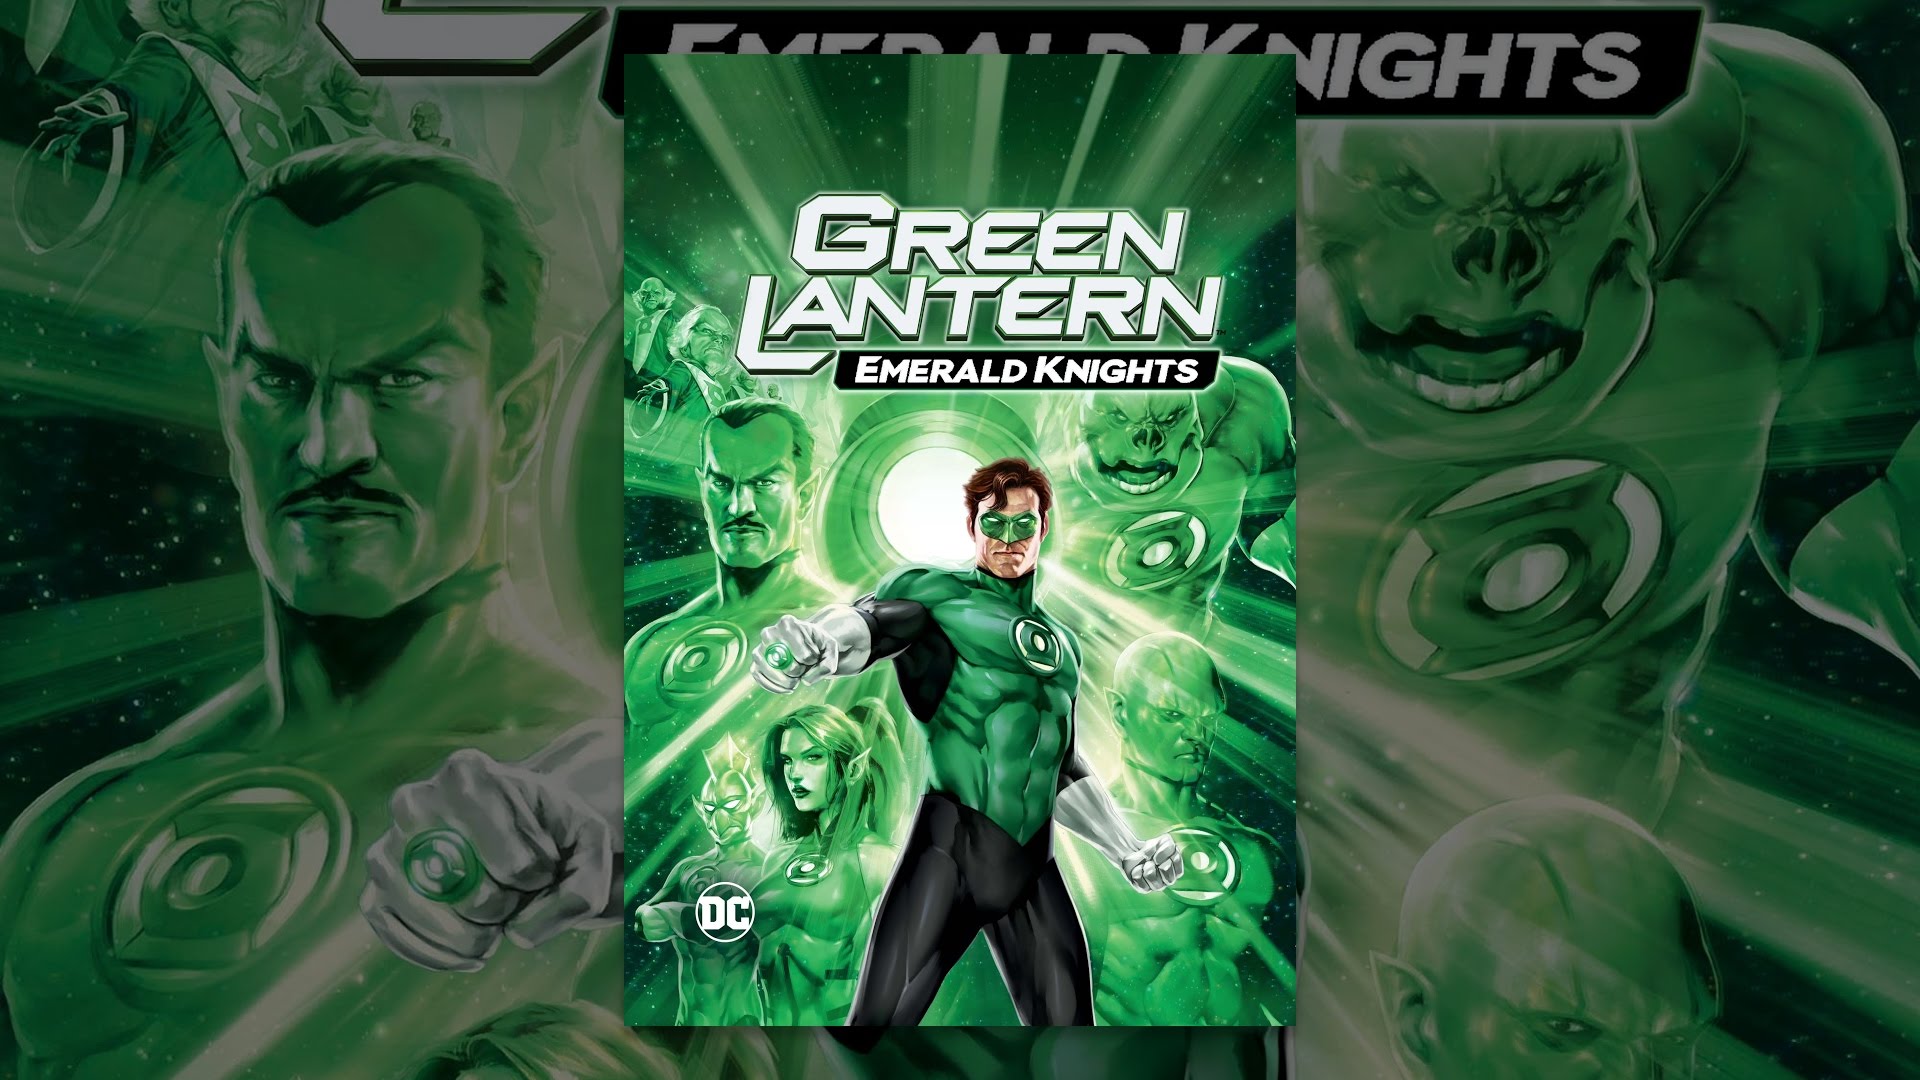 green lantern emerald knights movie poster